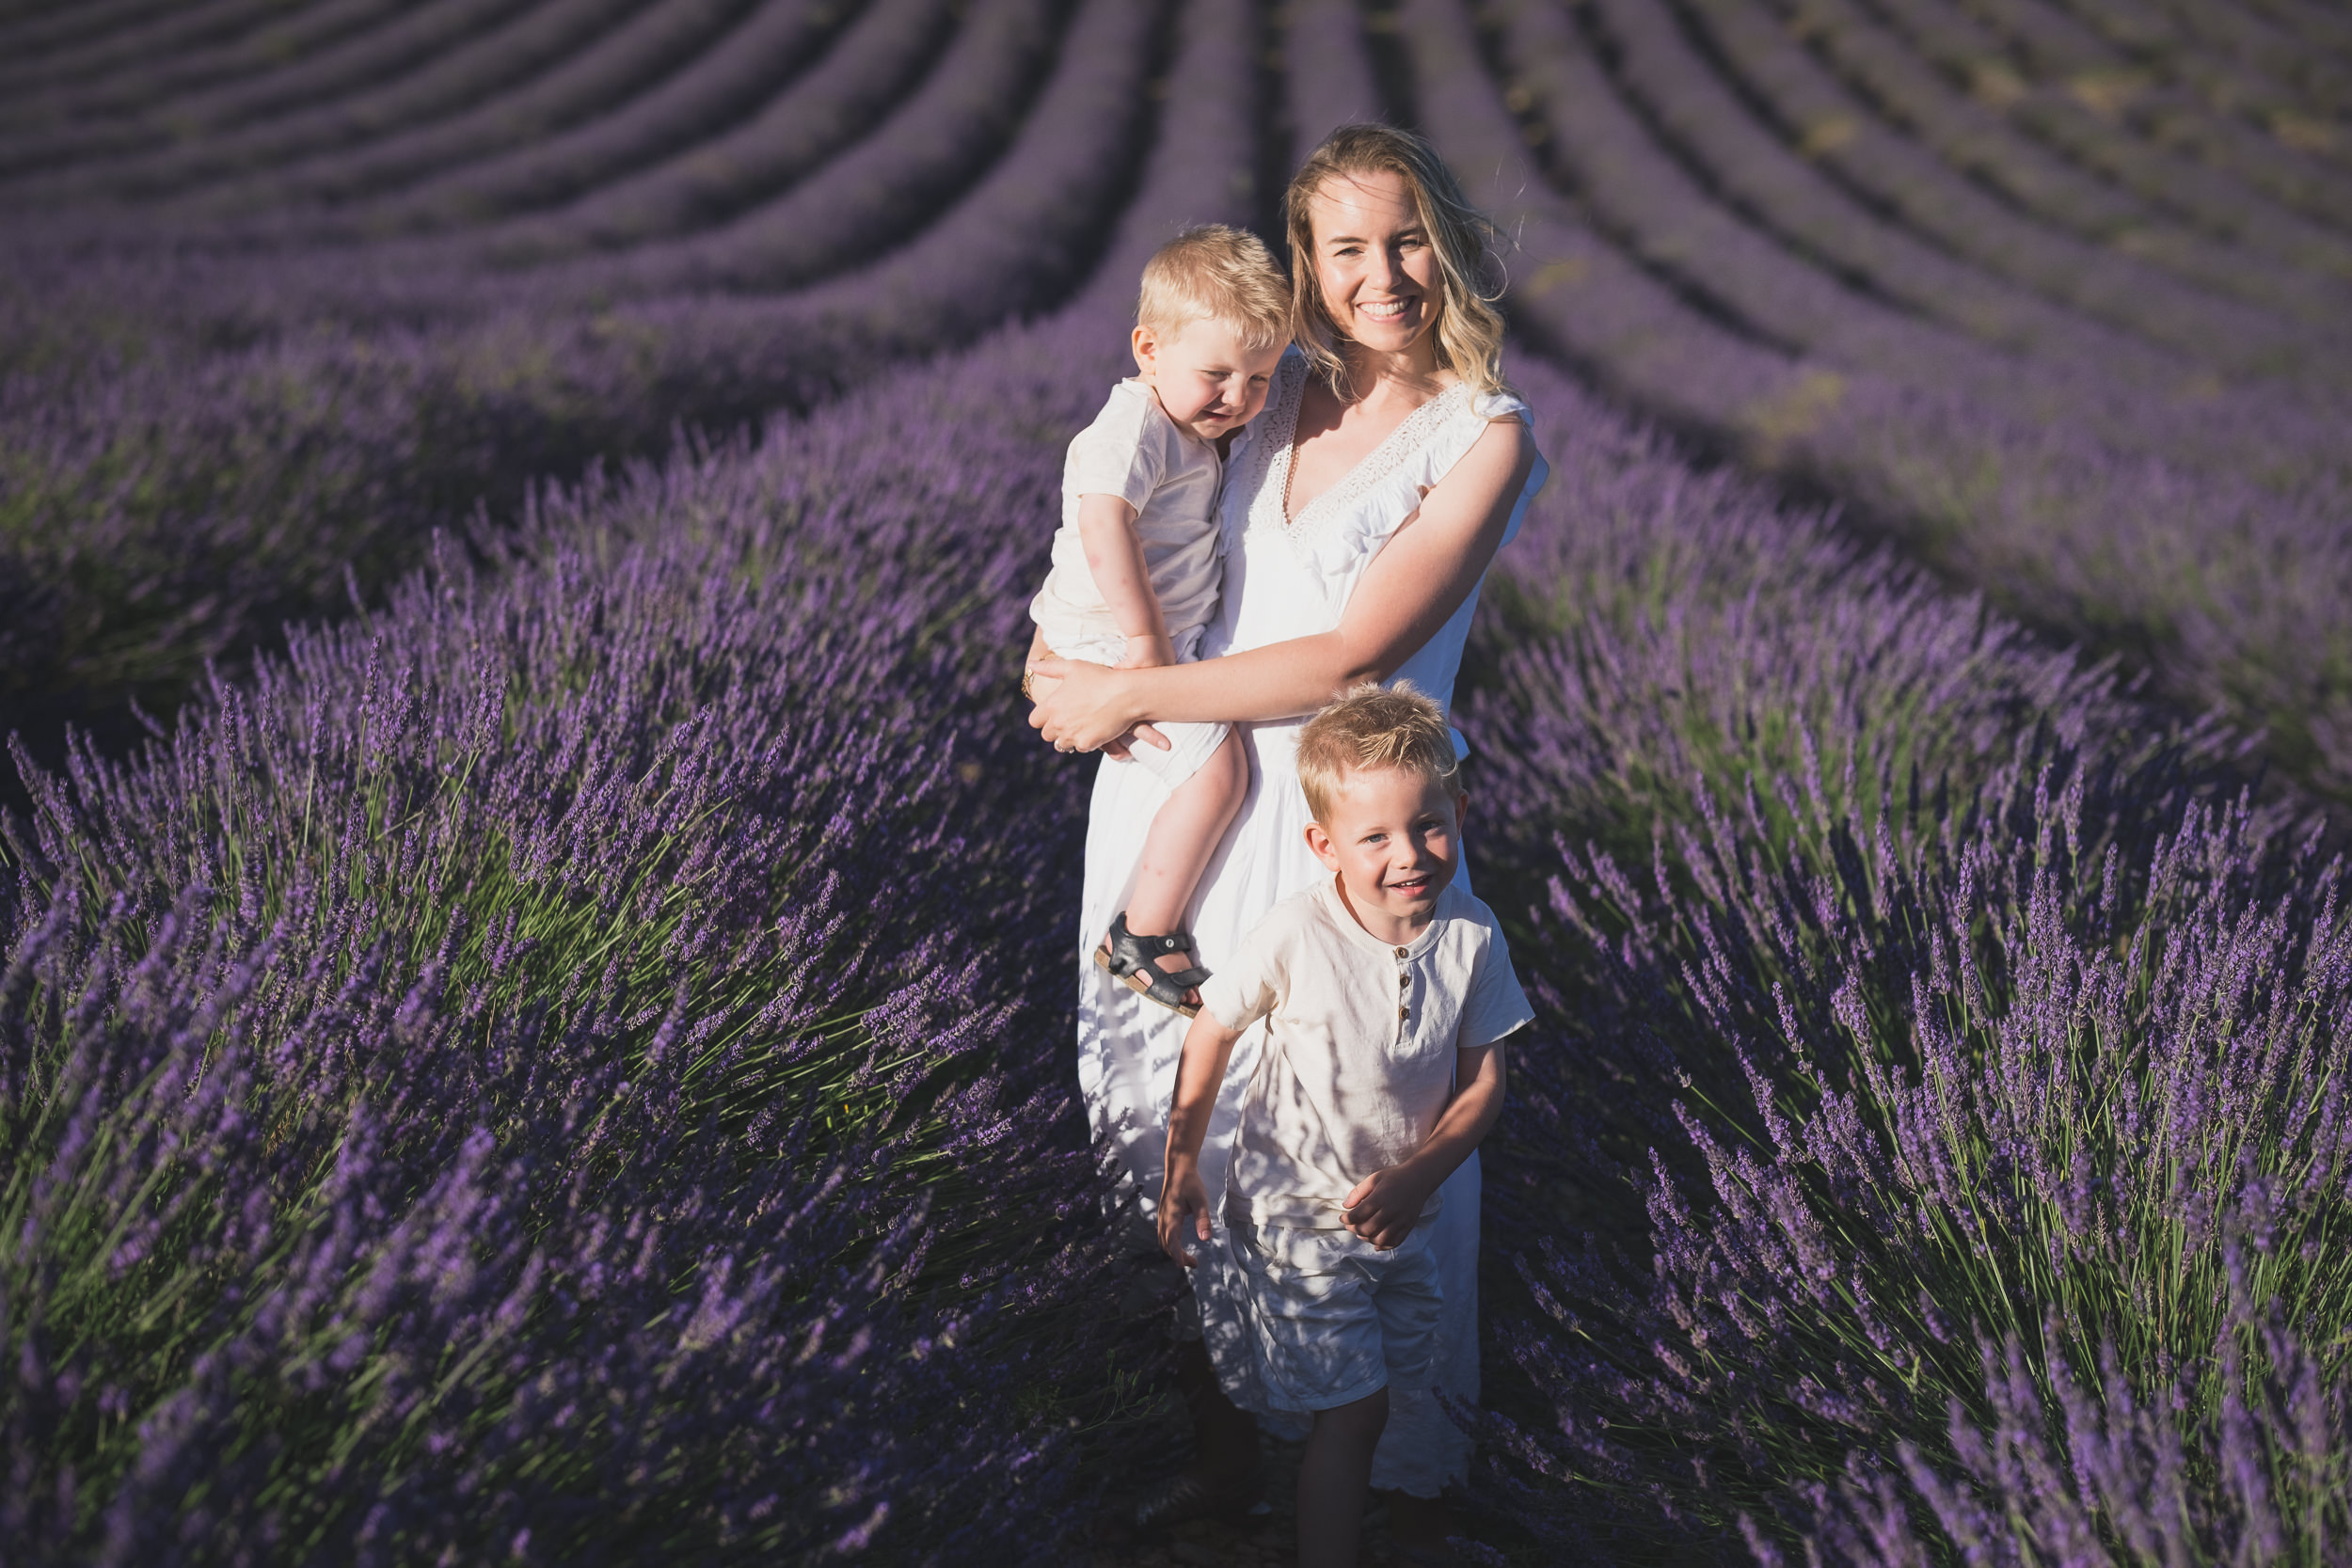 Family lavender photo session Valensole 143221